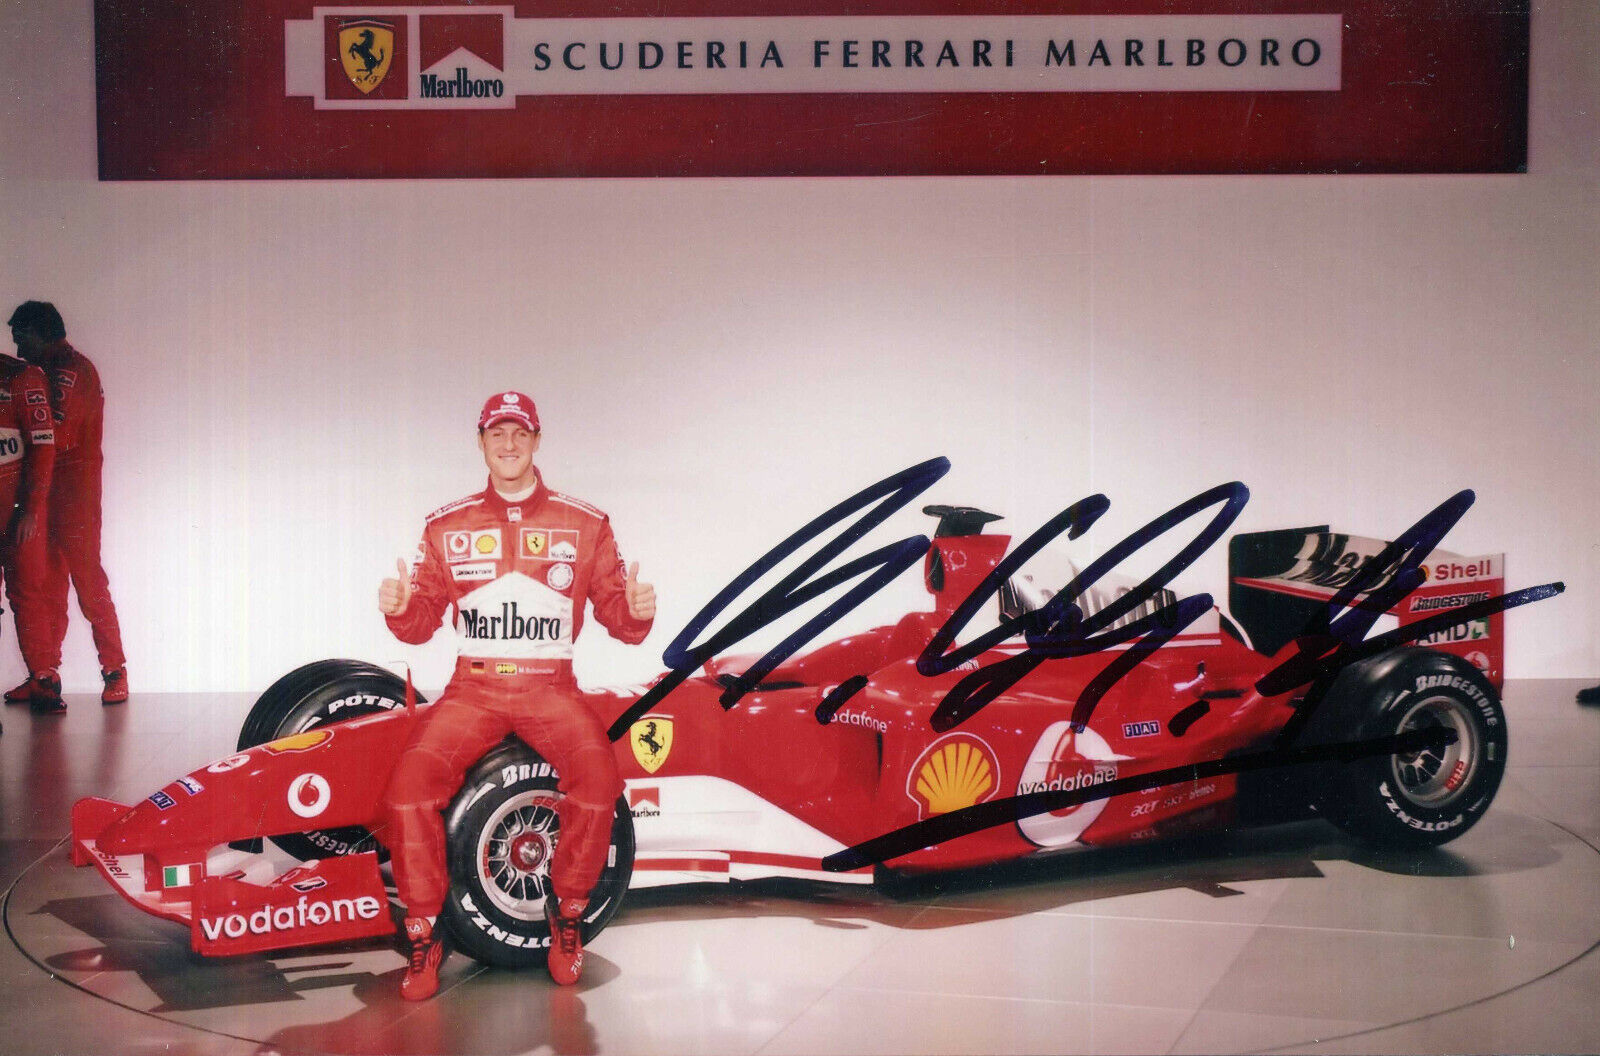 MICHAEL SCHUMACHER Signed Photo Poster paintinggraph - MOTOR RACING Formula 1 Champion preprint